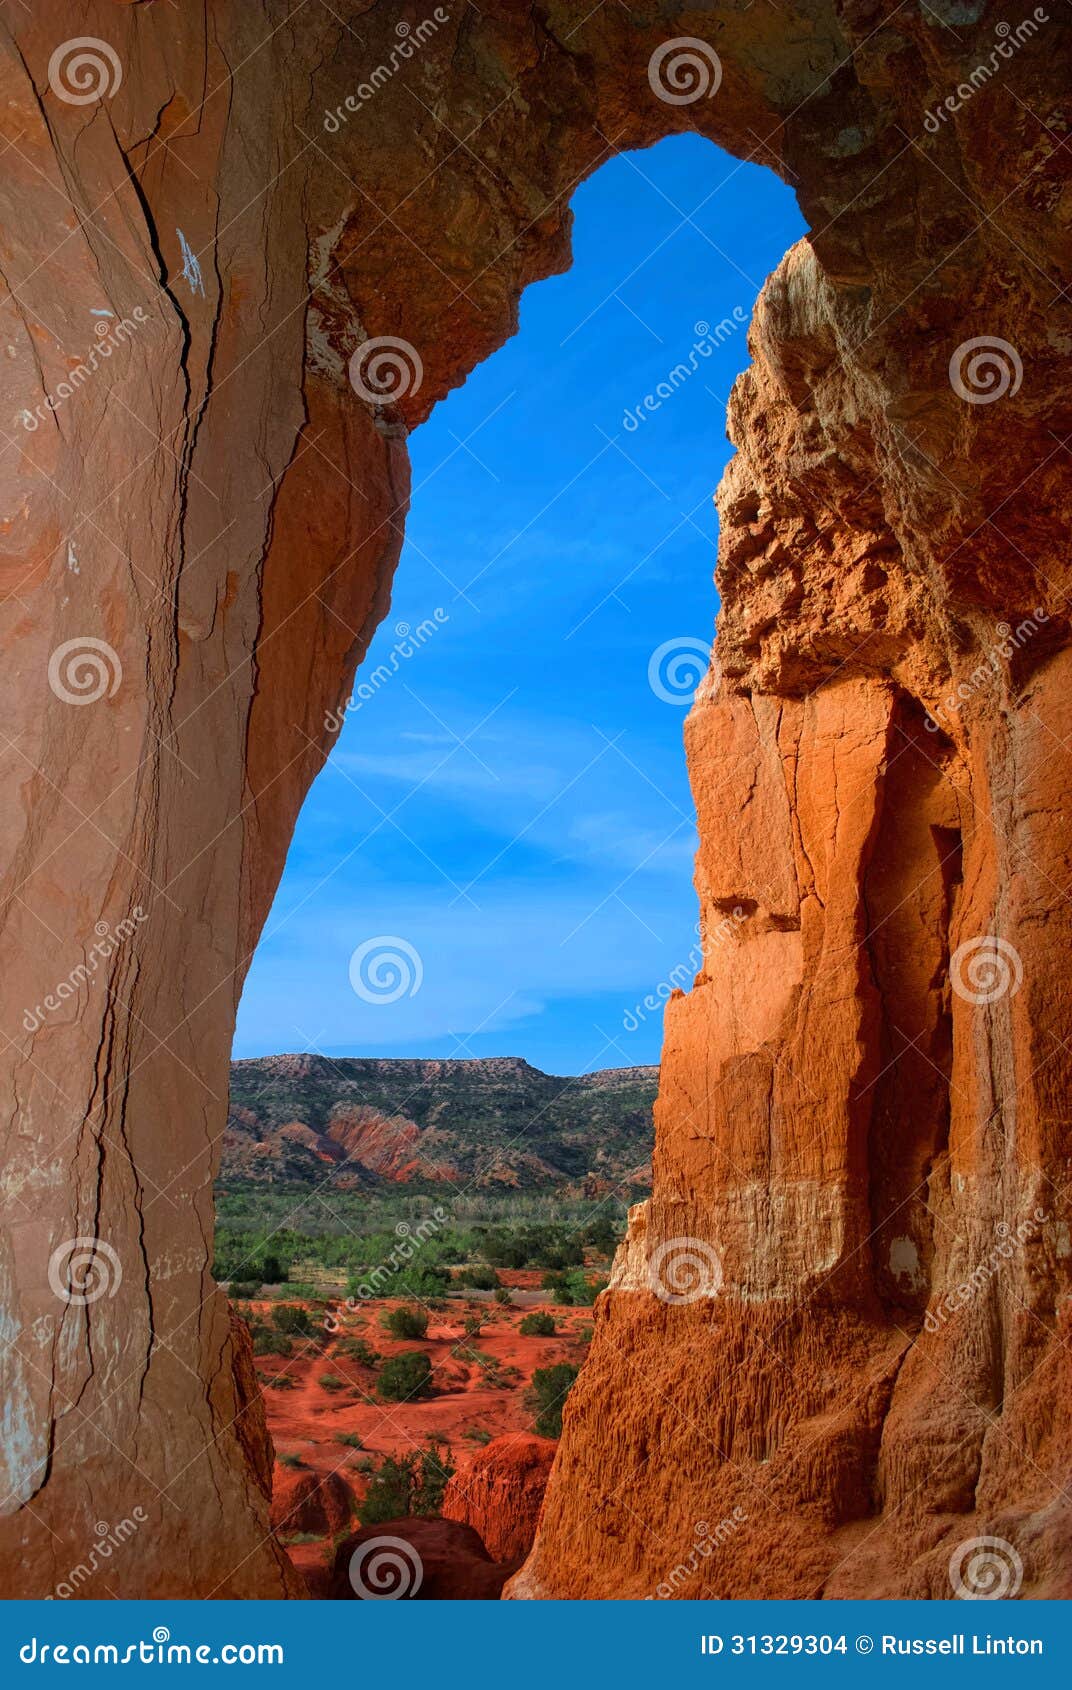 palo duro canyon cave view